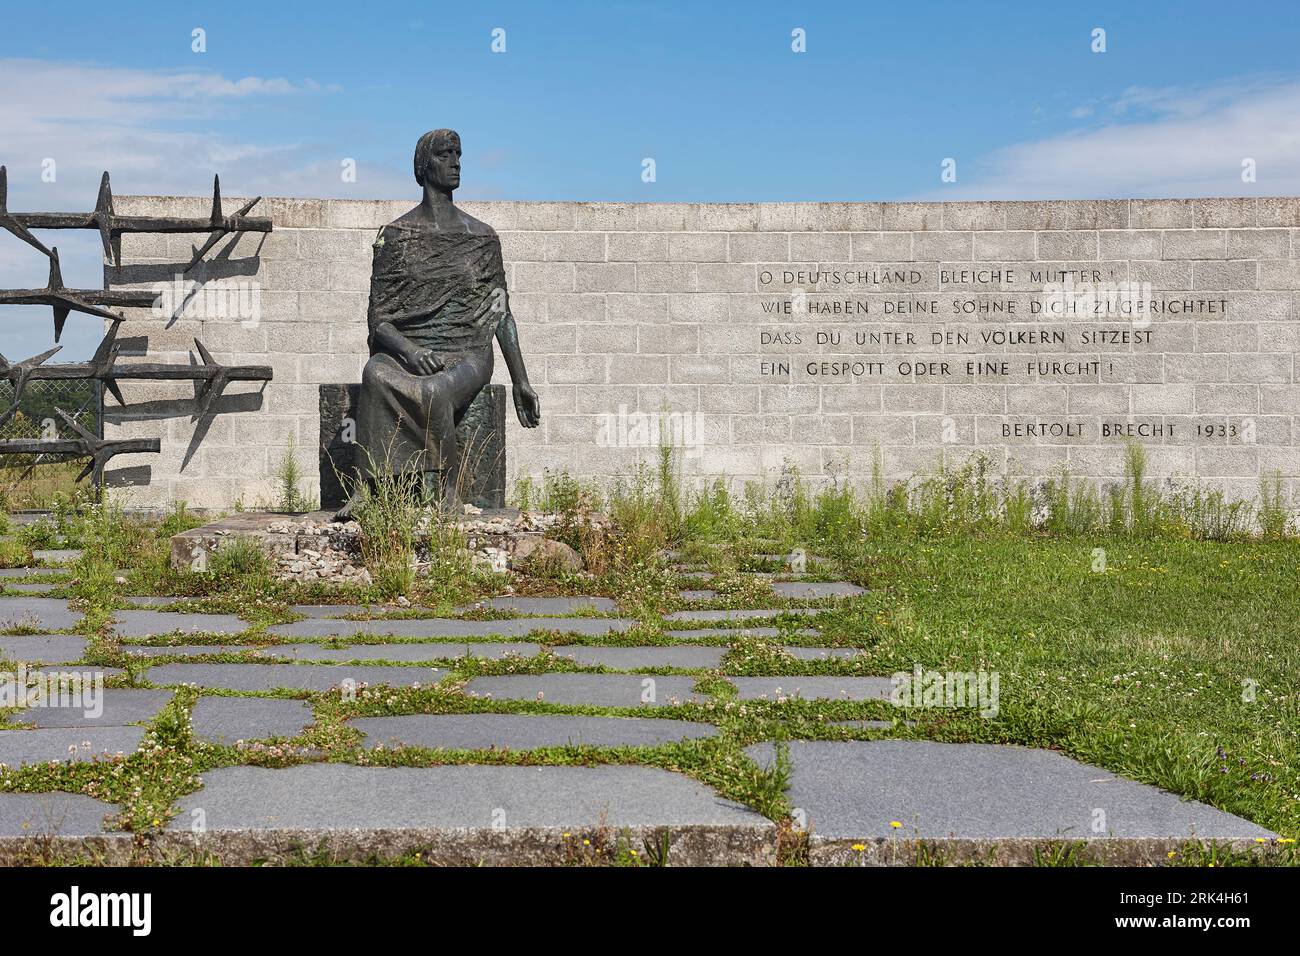 German sculpture tribute in Mauthausen memorial. Prisioners of war. Austria Stock Photo